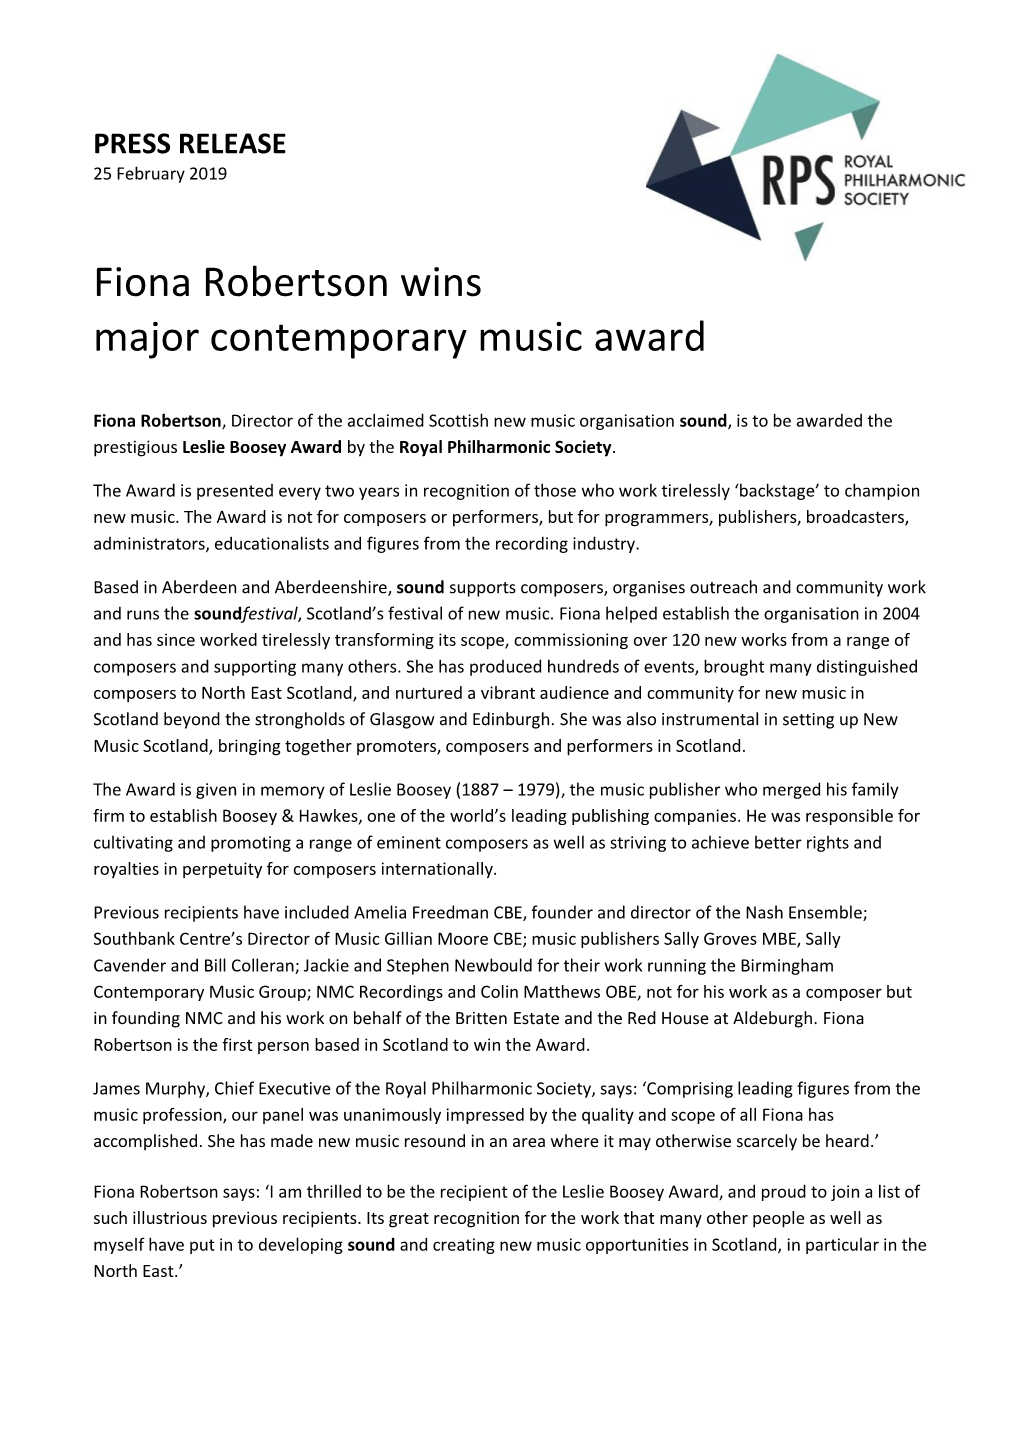 Fiona Robertson Wins Major Contemporary Music Award